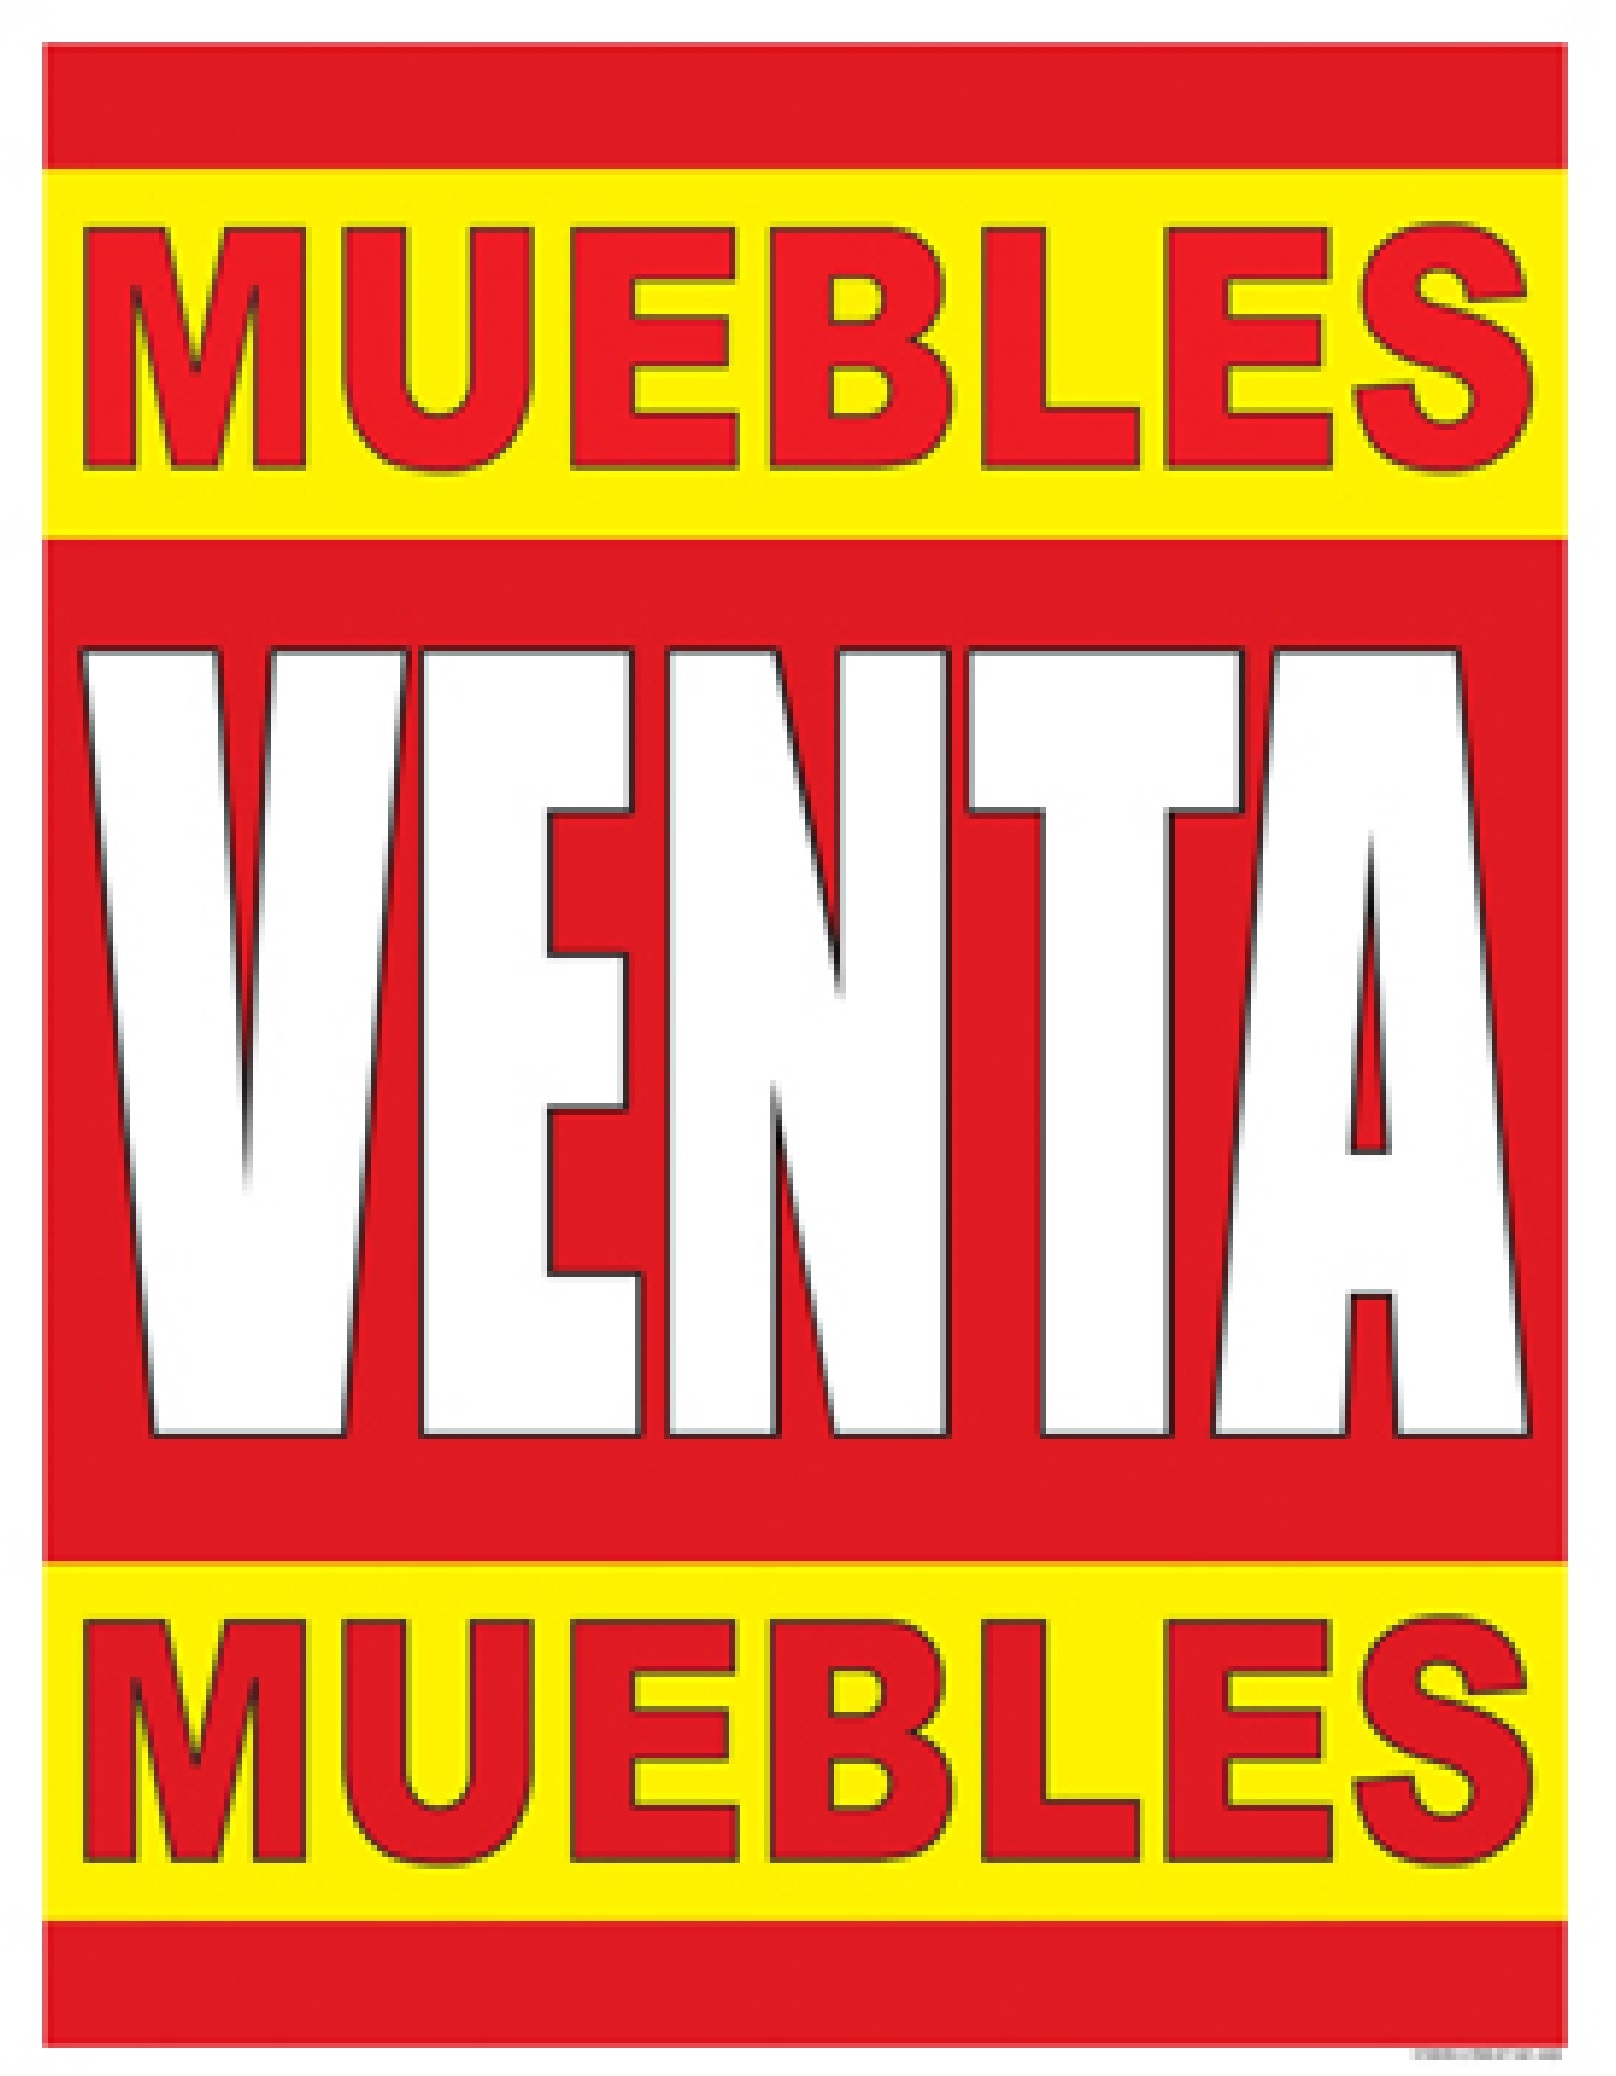 Muebles Venta Muebles SPANISH FURNITURE SALE Window Poster Sign 25x33 